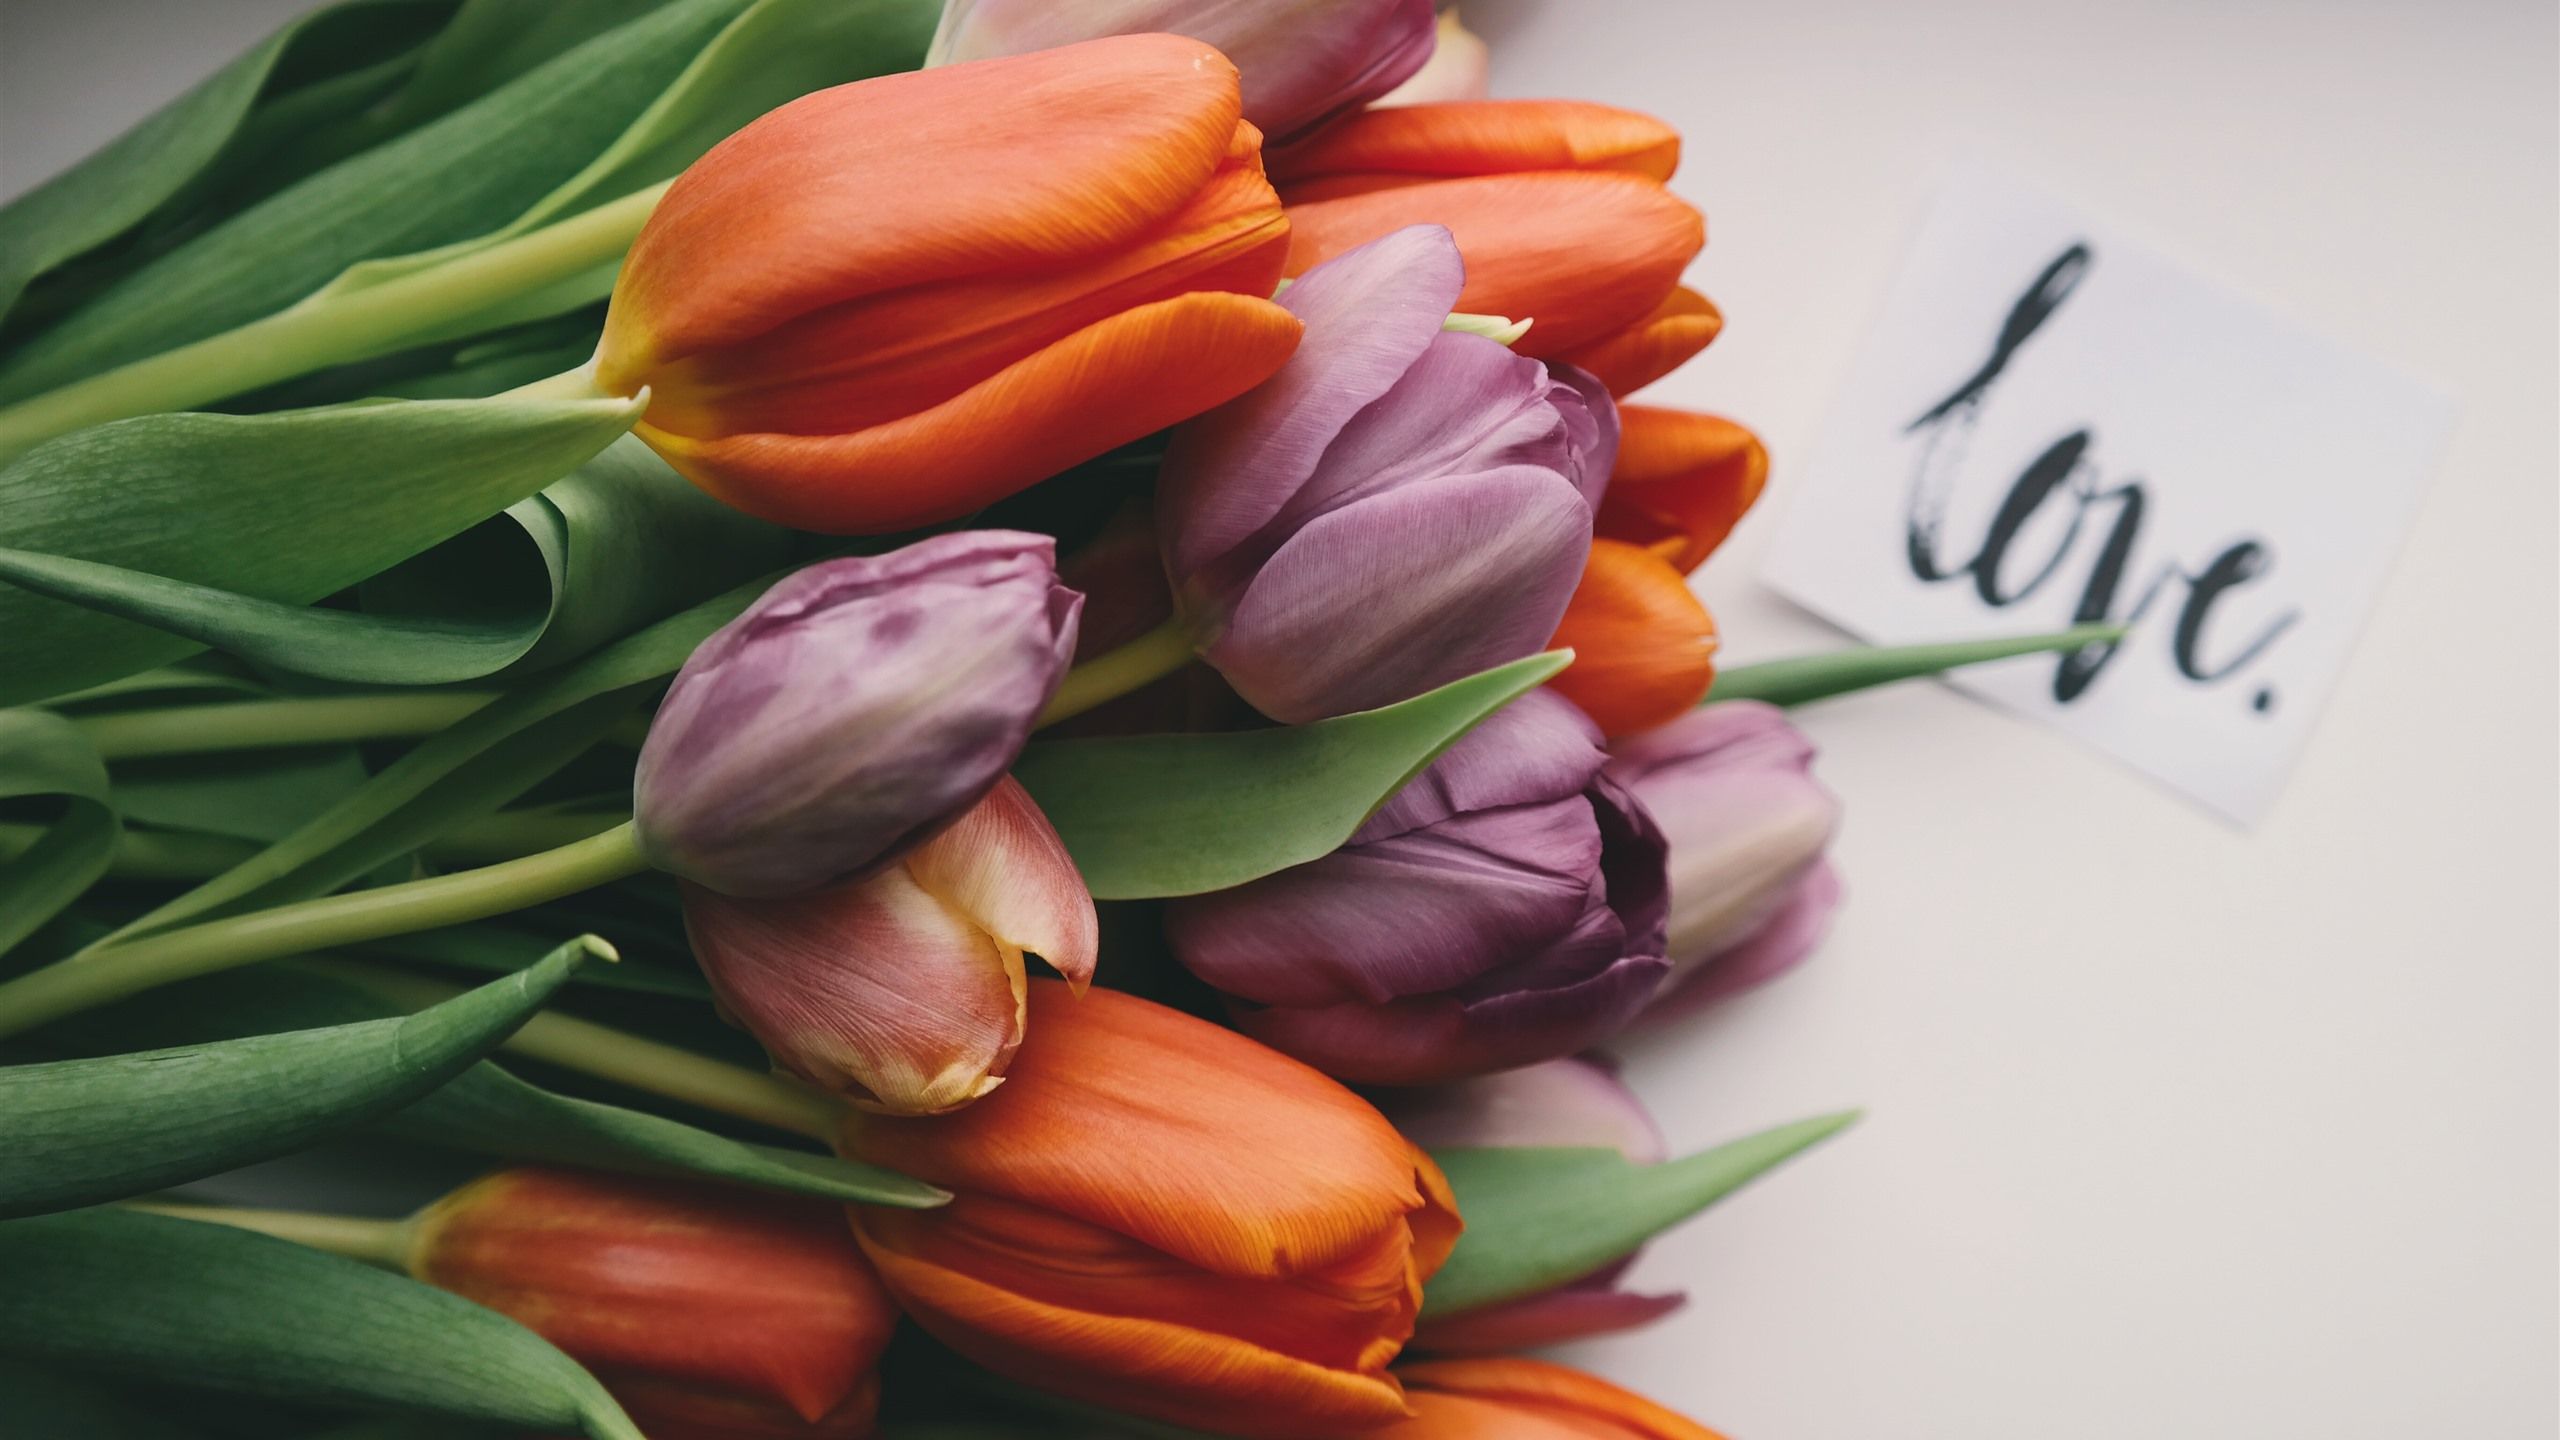 Wallpaper Purple and orange tulips, bouquet 5120x2880 UHD 5K Picture, Image